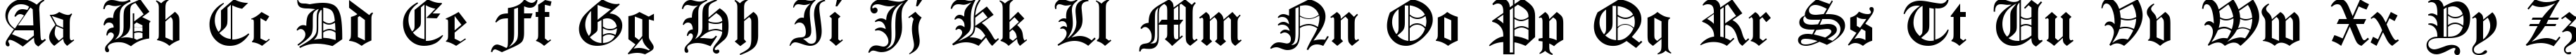 Пример написания английского алфавита шрифтом Old English Five